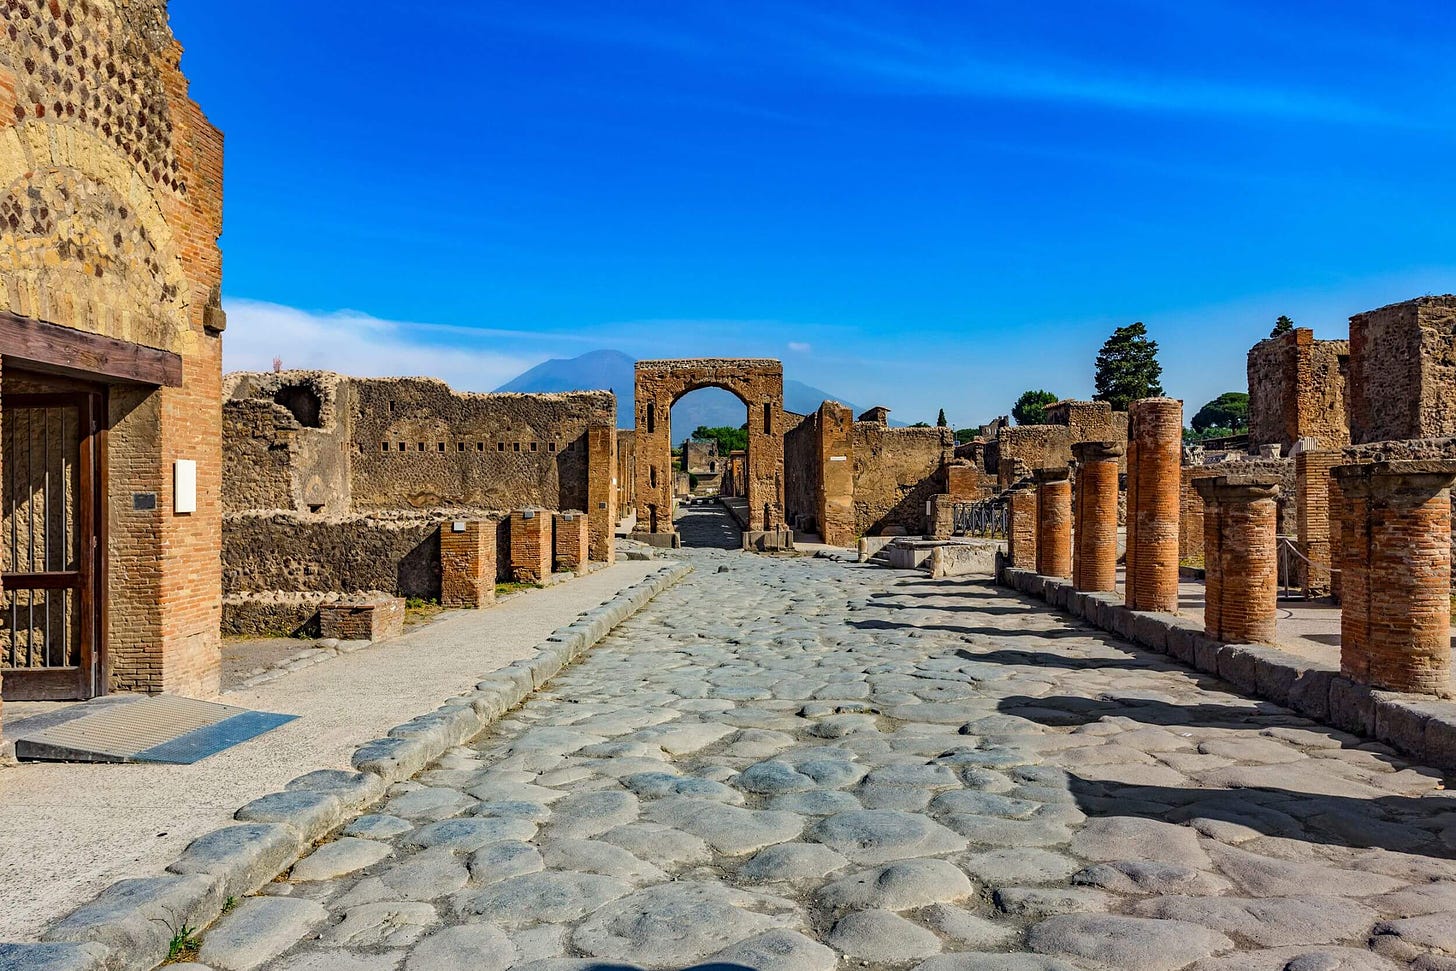 An Ancient Roman road